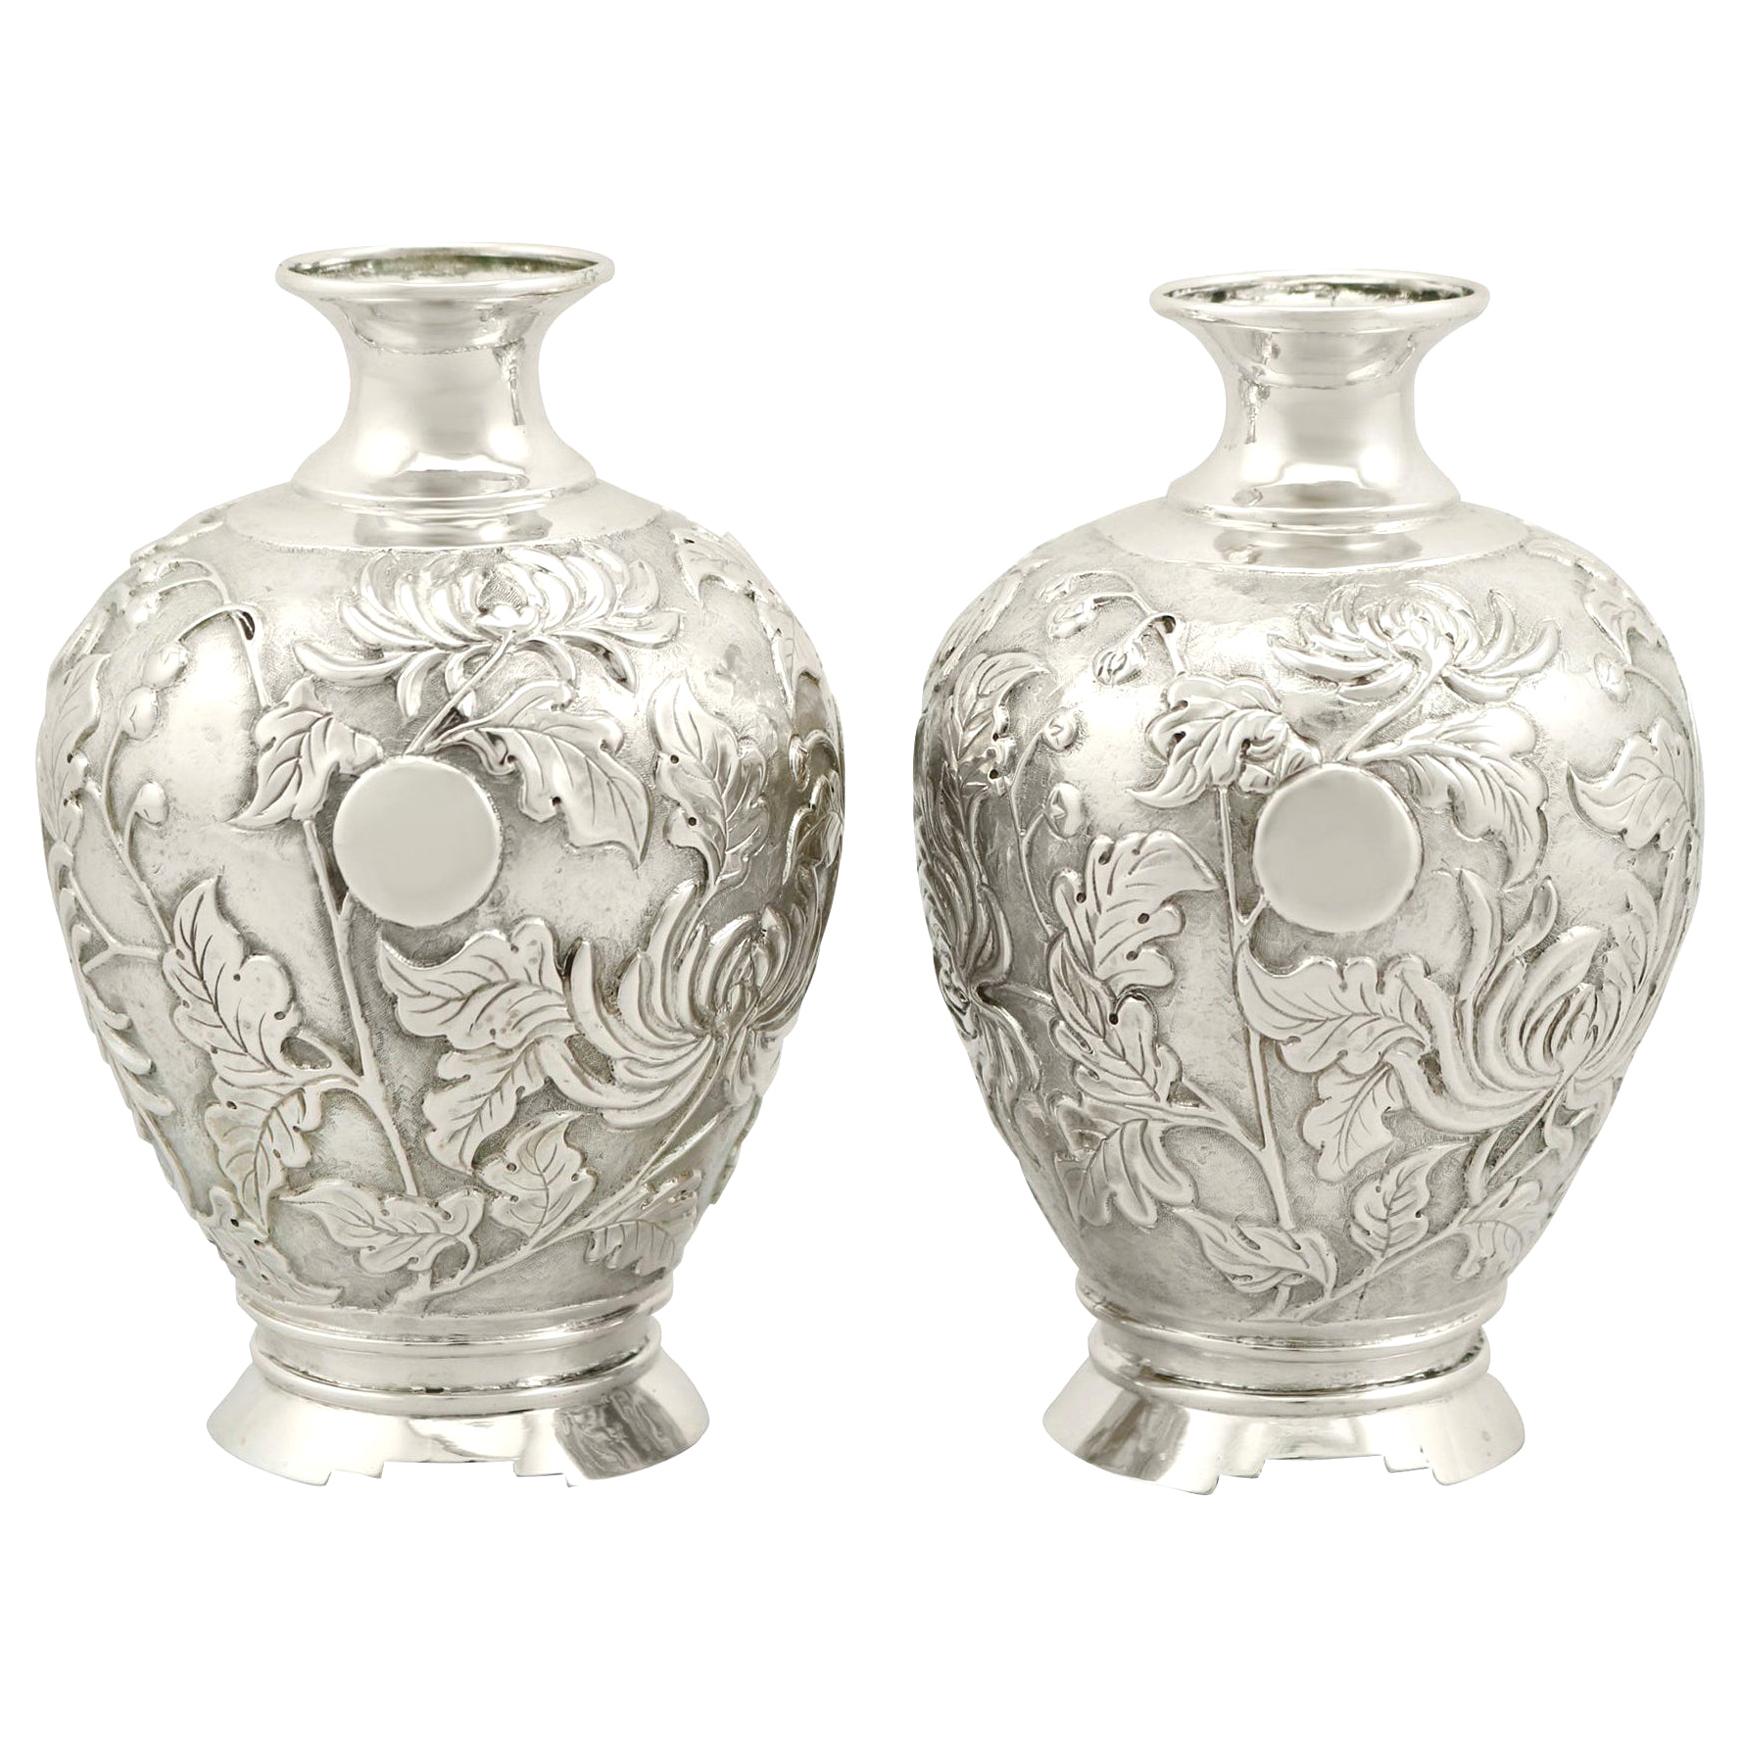 Antique Japanese Silver Bud Vases, circa 1900